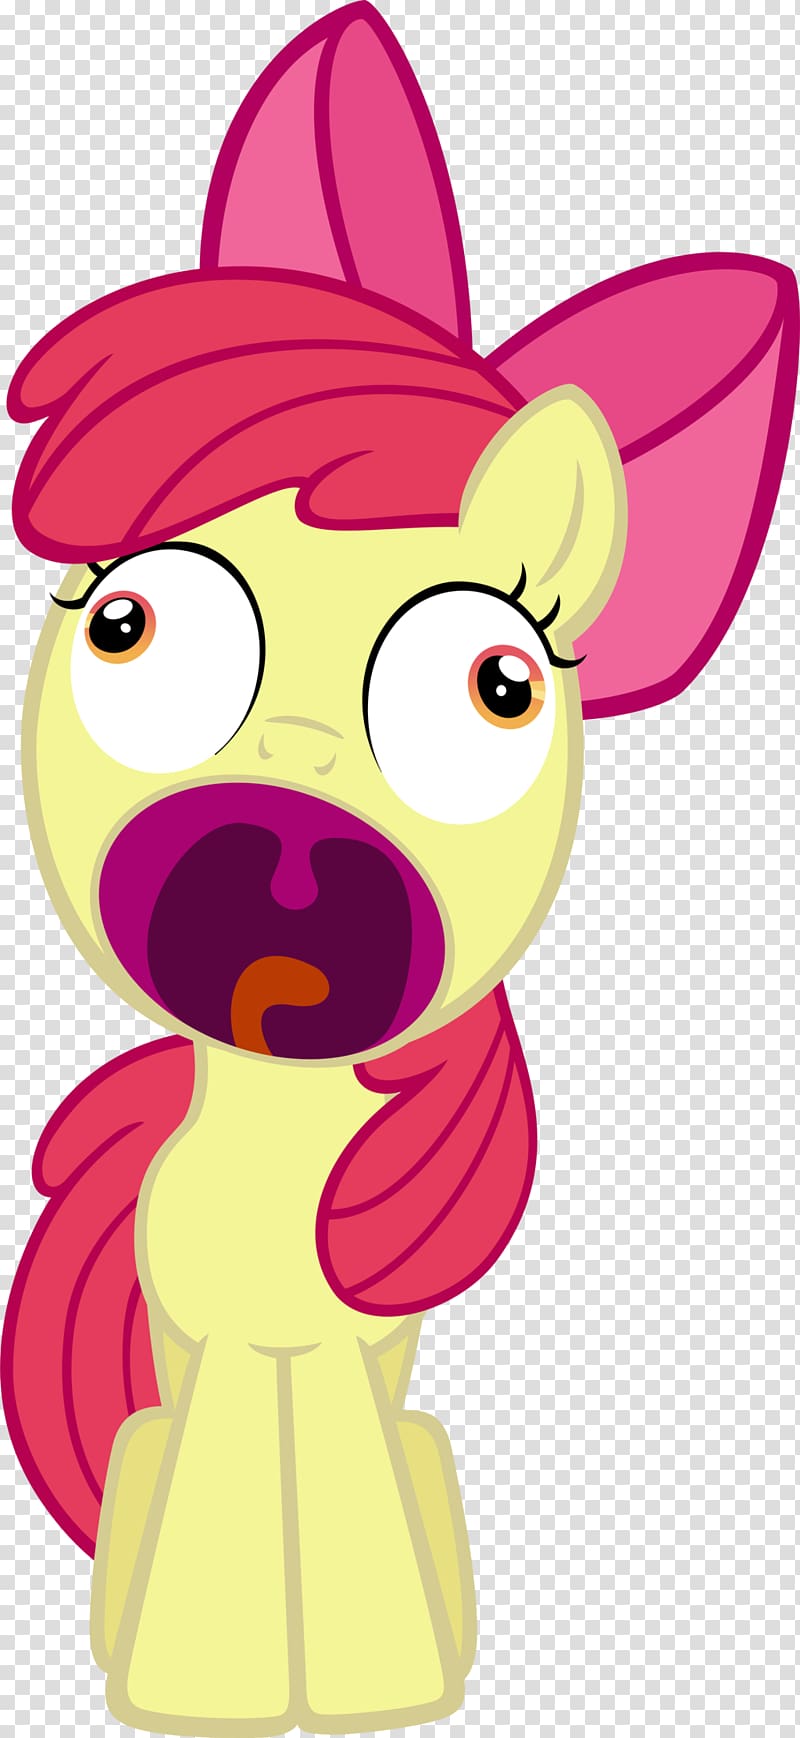 Applejack Apple Bloom Rainbow Dash Rarity Pinkie Pie, pony apple bloom transparent background PNG clipart